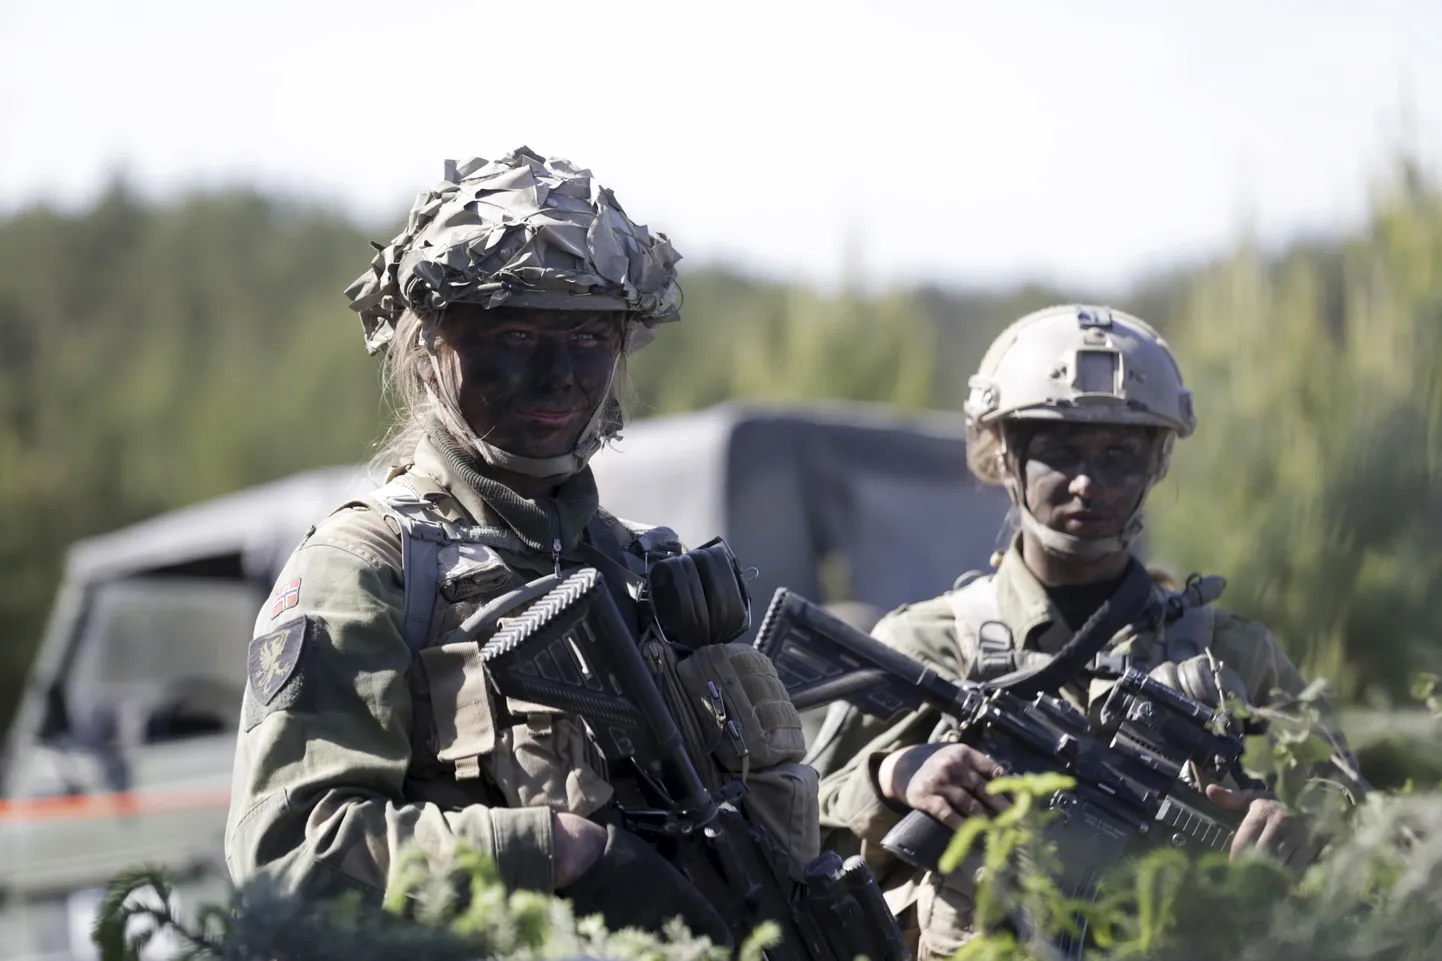 Norra sõjaväelased manöövritel Lätis.